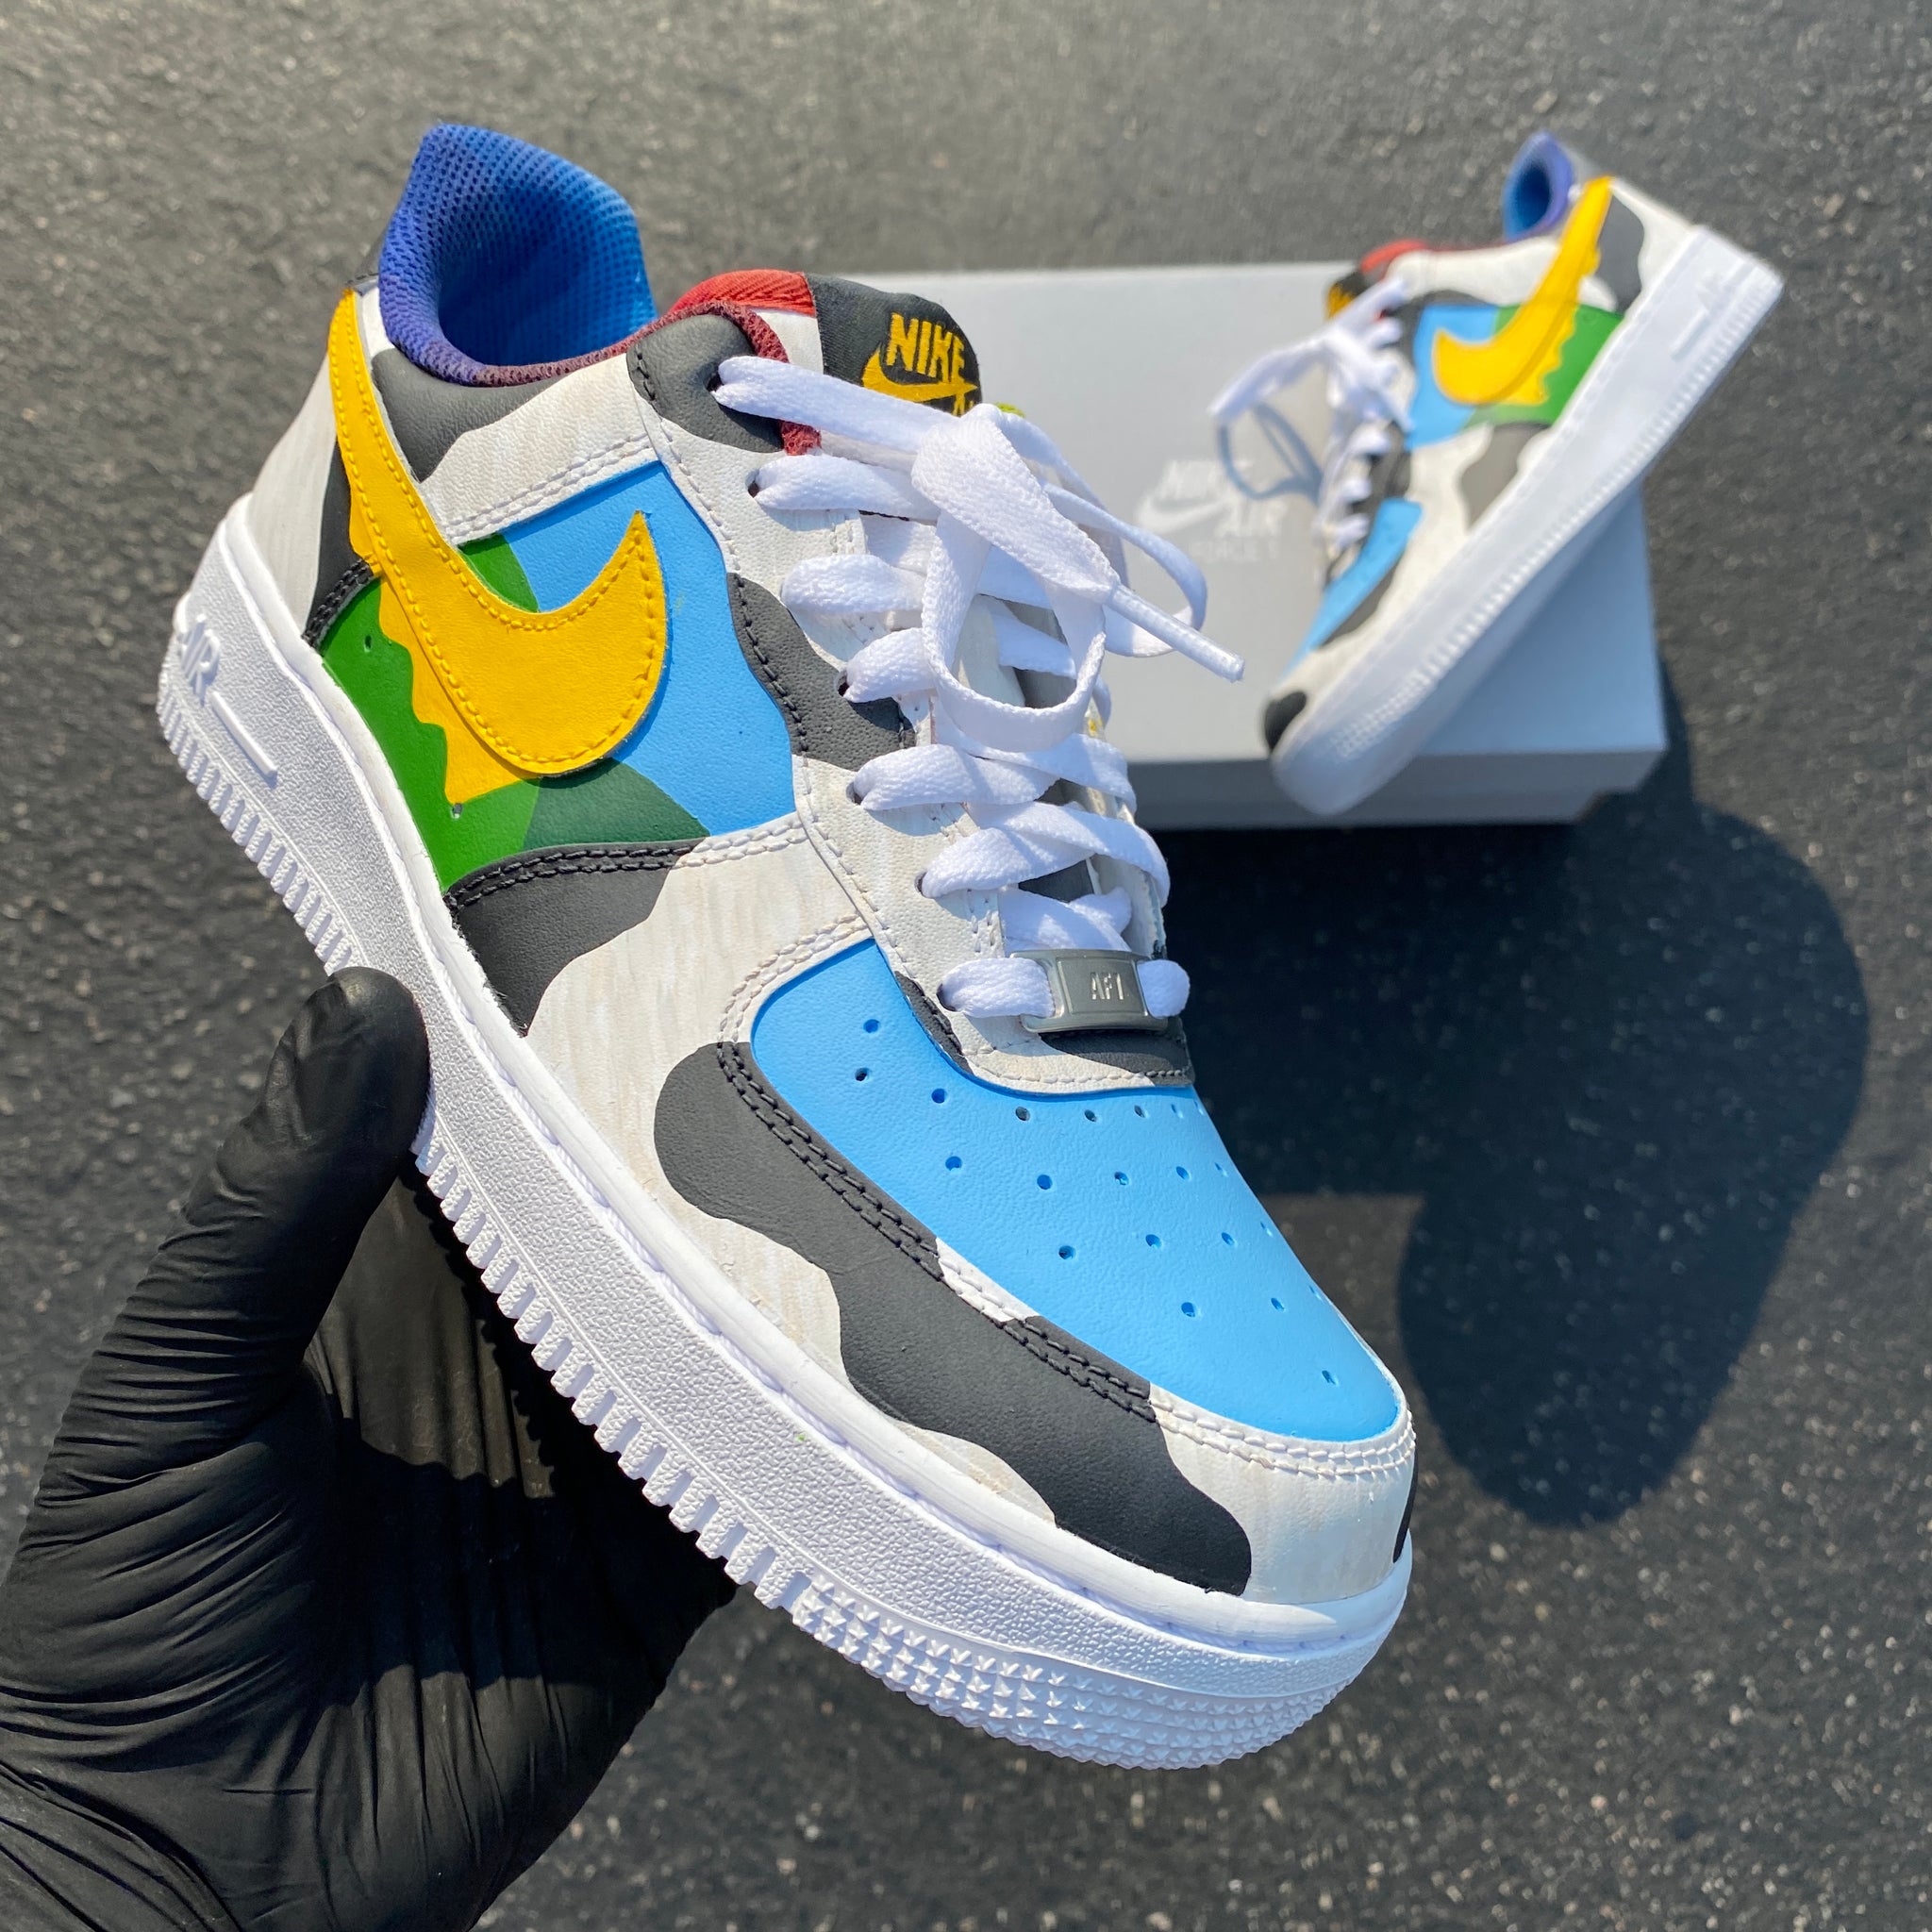 Nike Air Force Custom Inspire Shoes